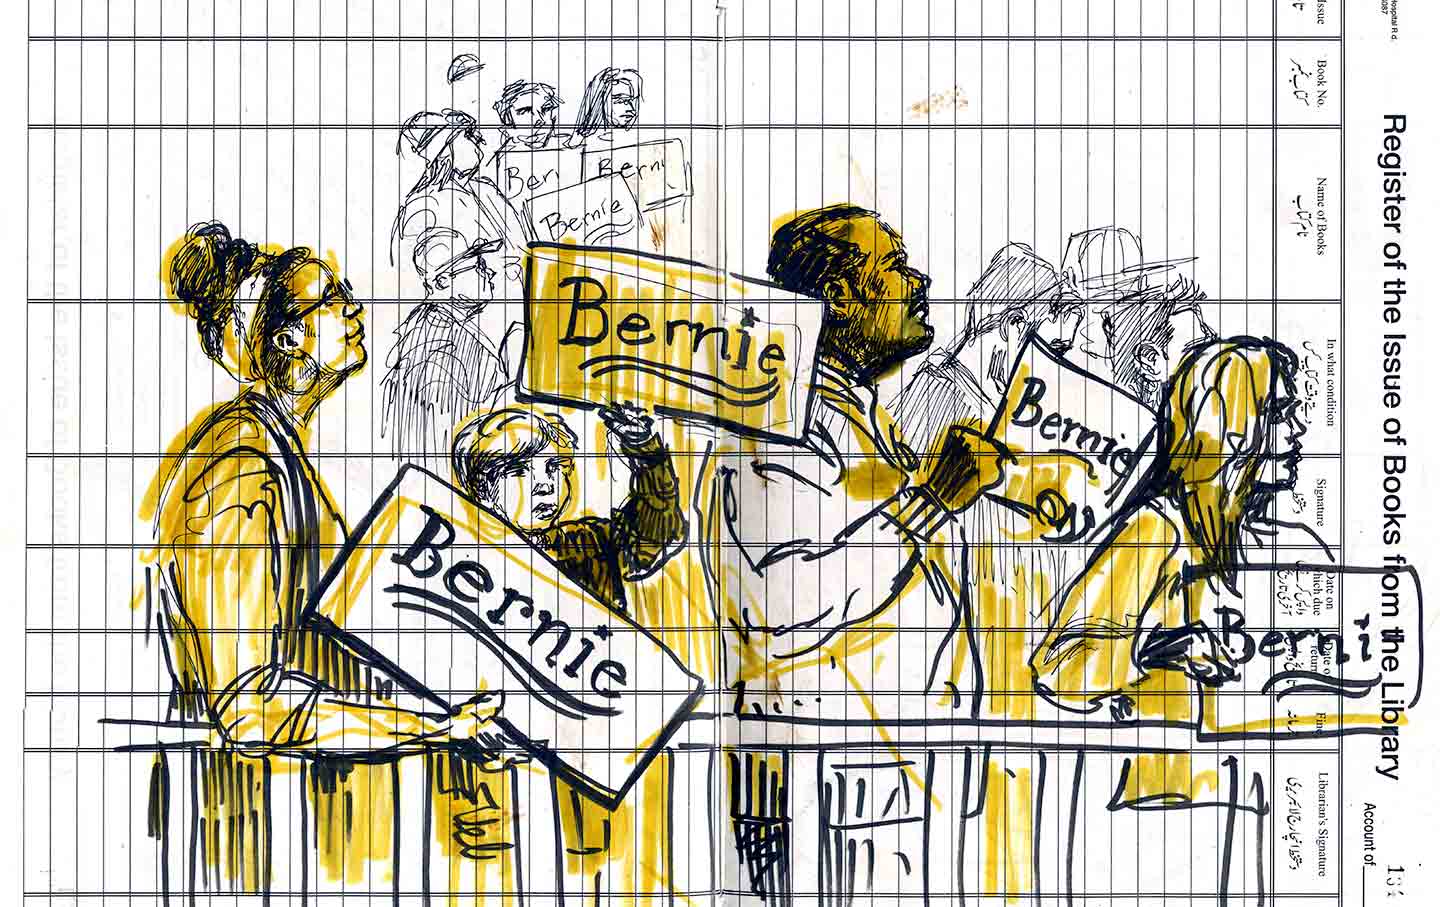 A Sanders Campaign Sketchbook